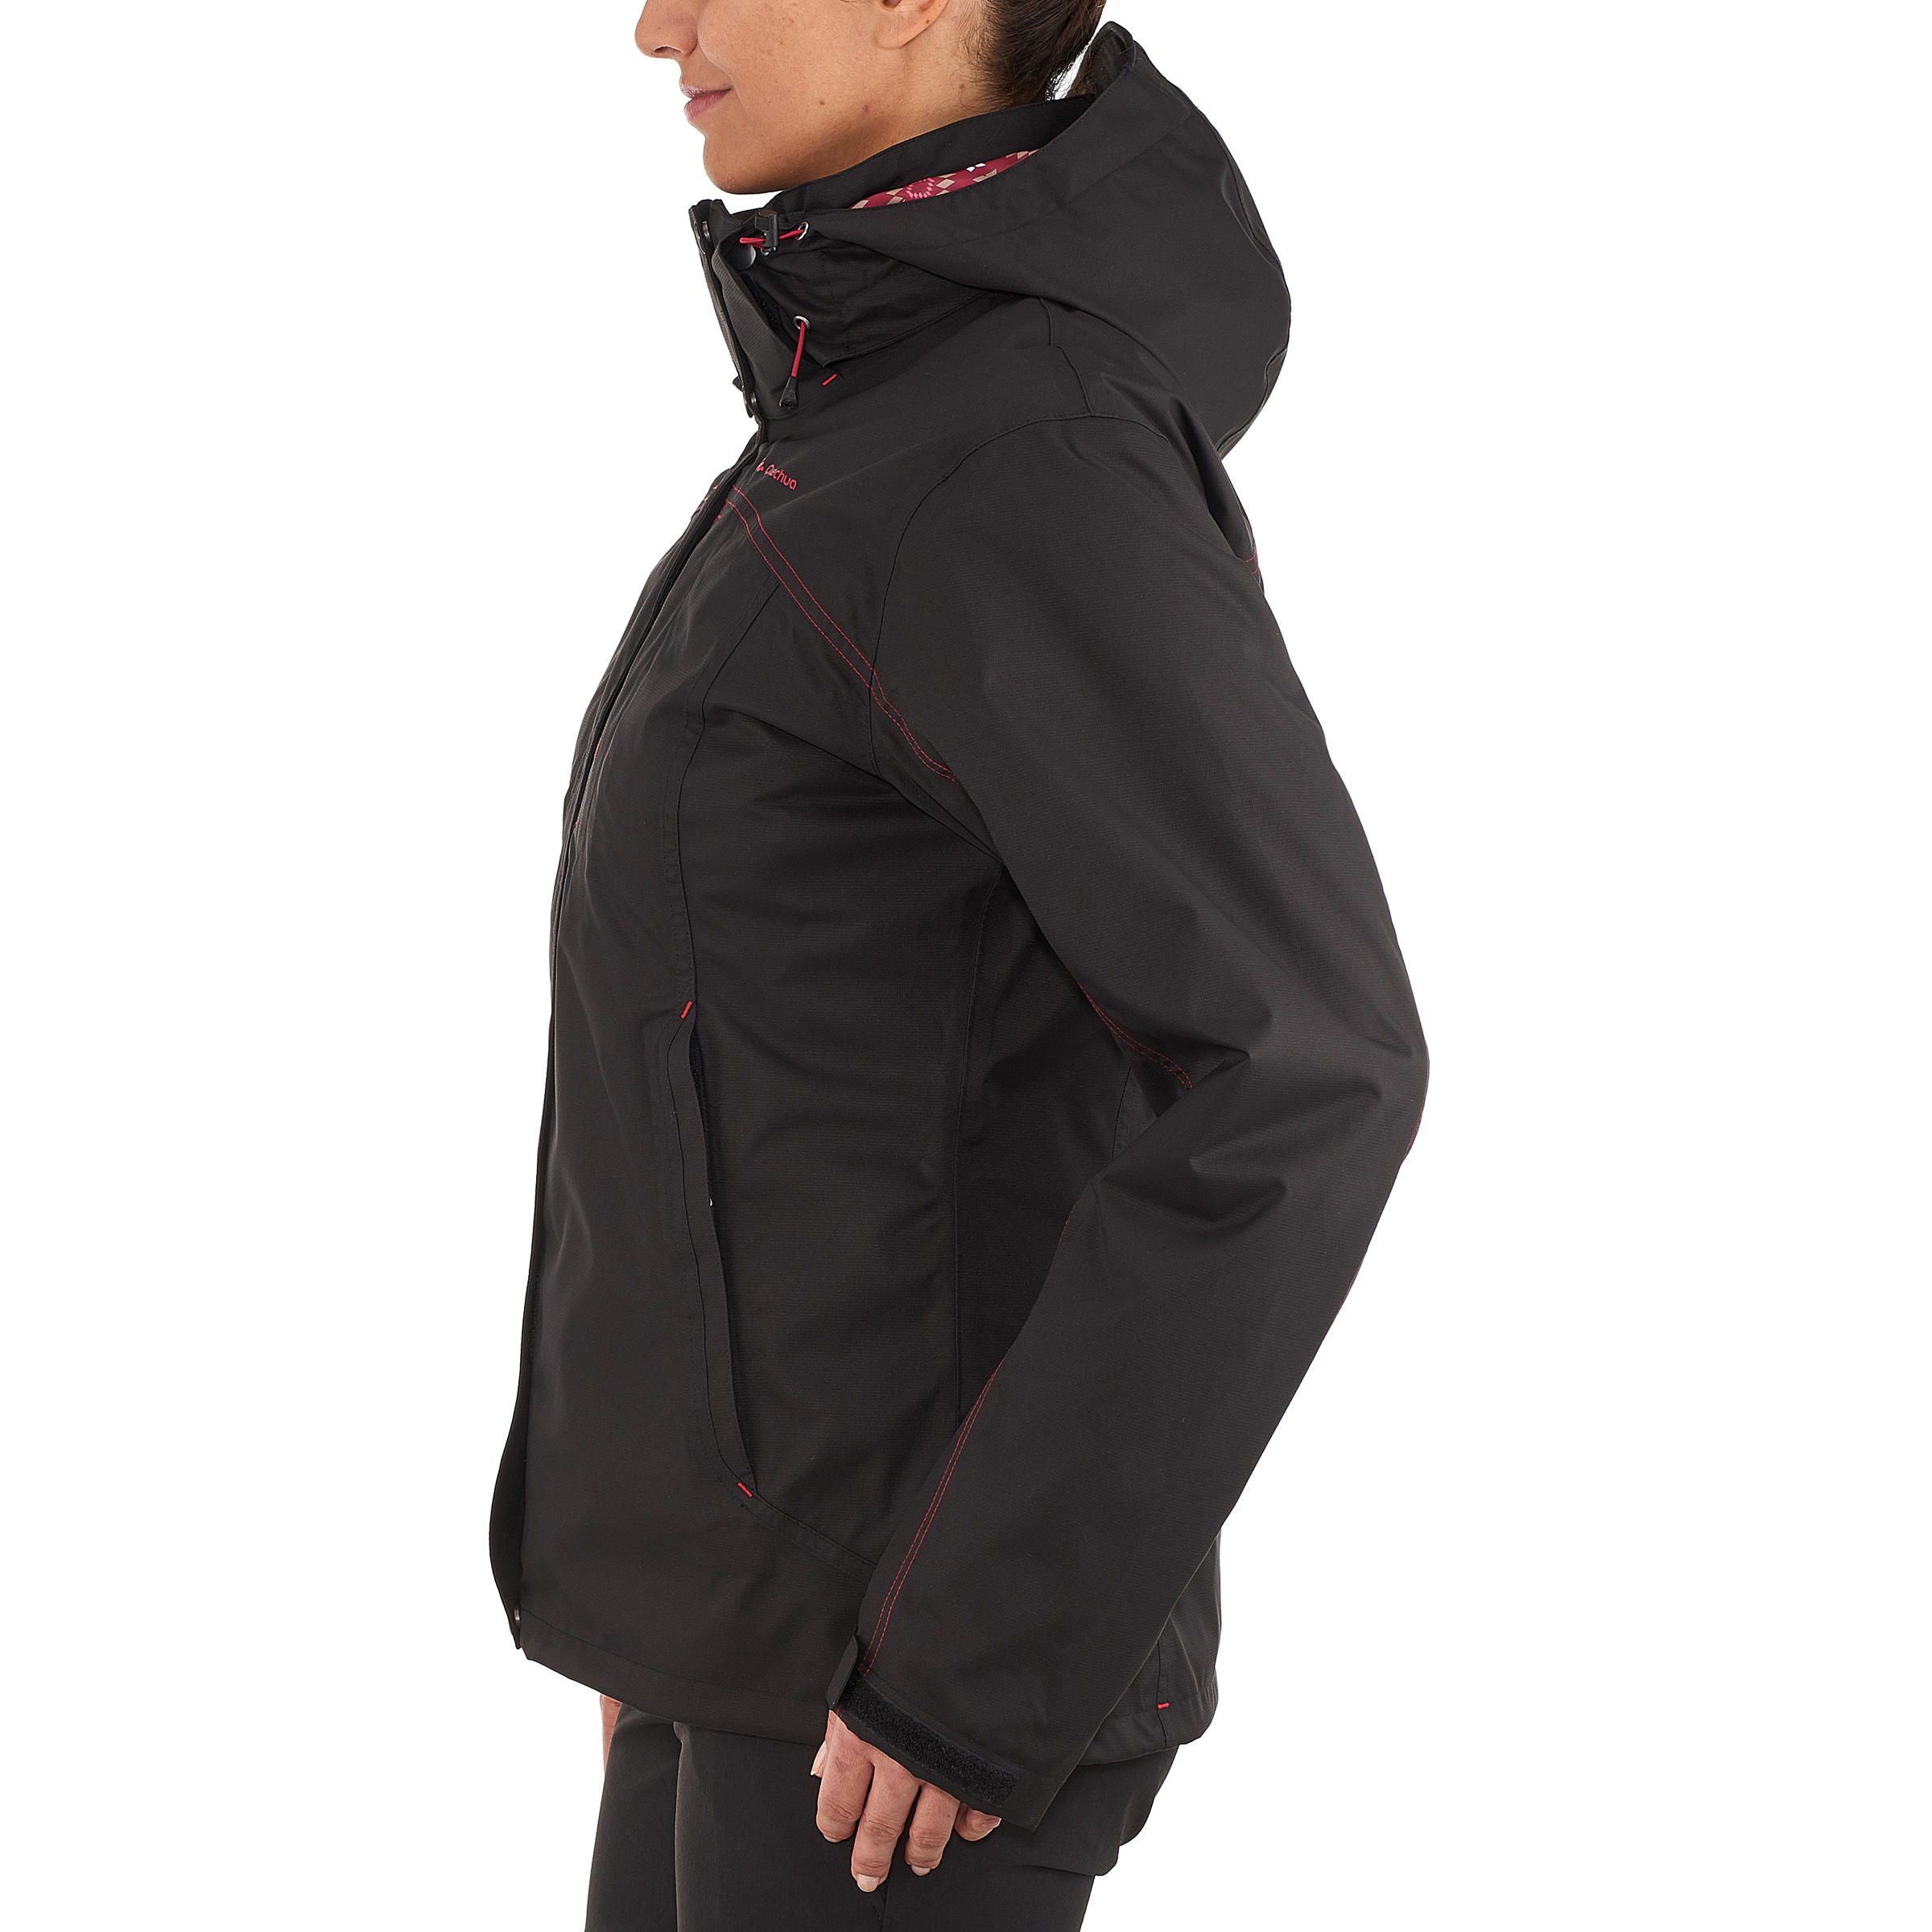 Rainwarm 100 Women's 3-in-1 Trekking Jacket - Black 9/26